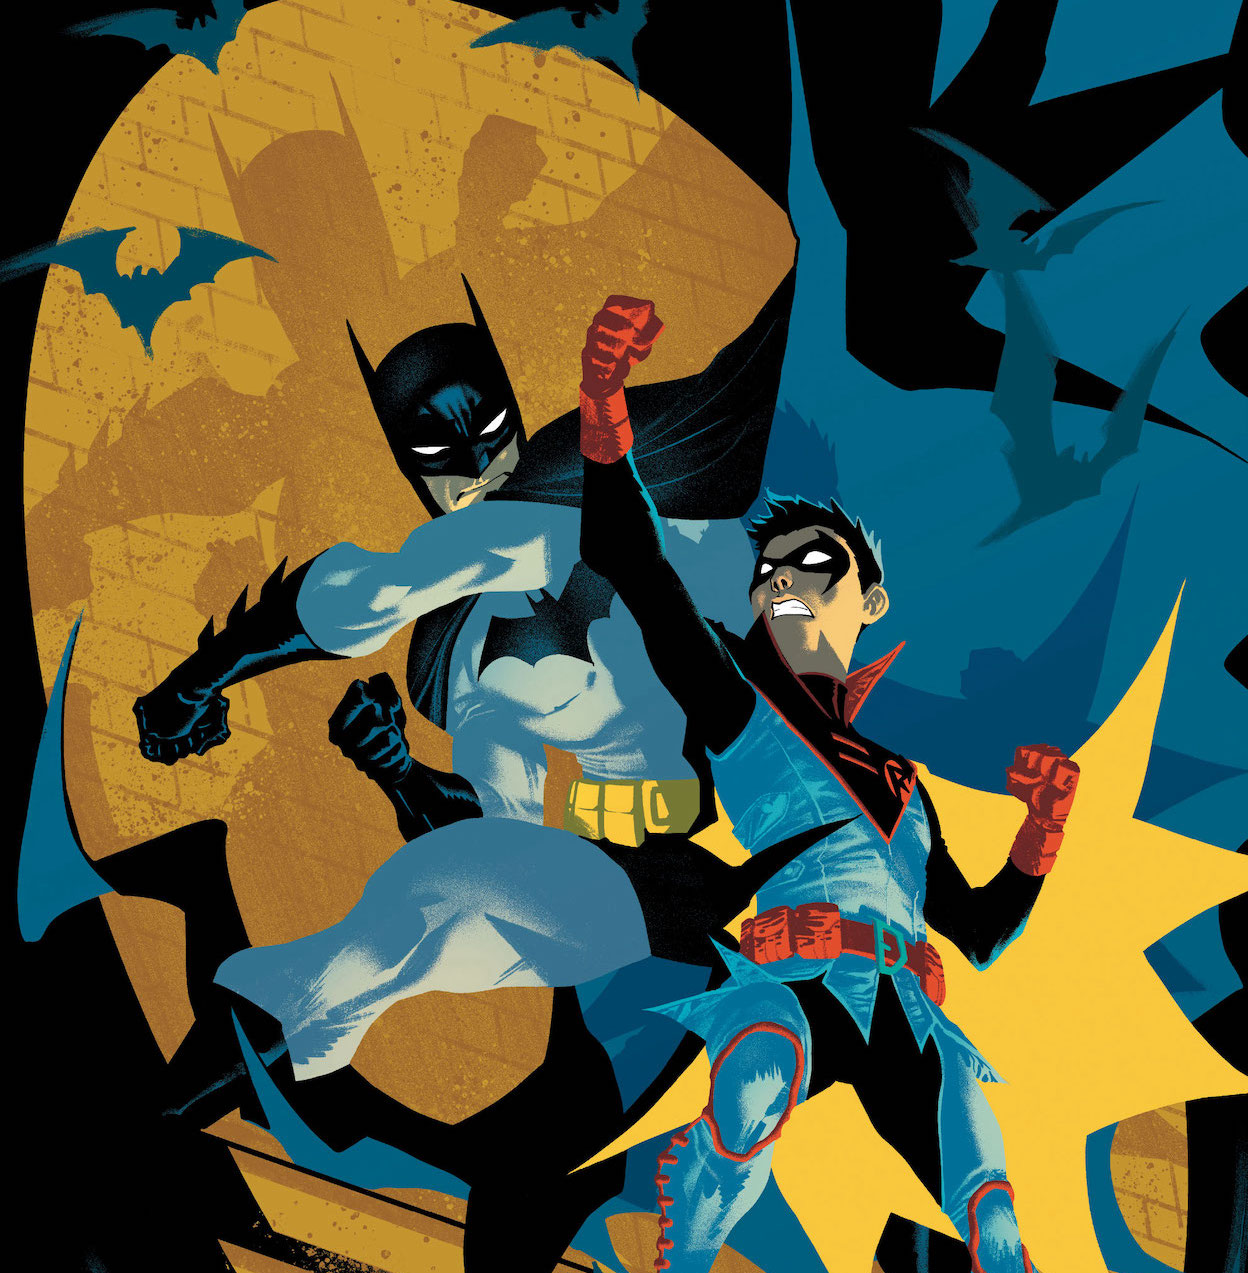 'Batman vs. Robin' #2 leans into the mystical side of DC Comics